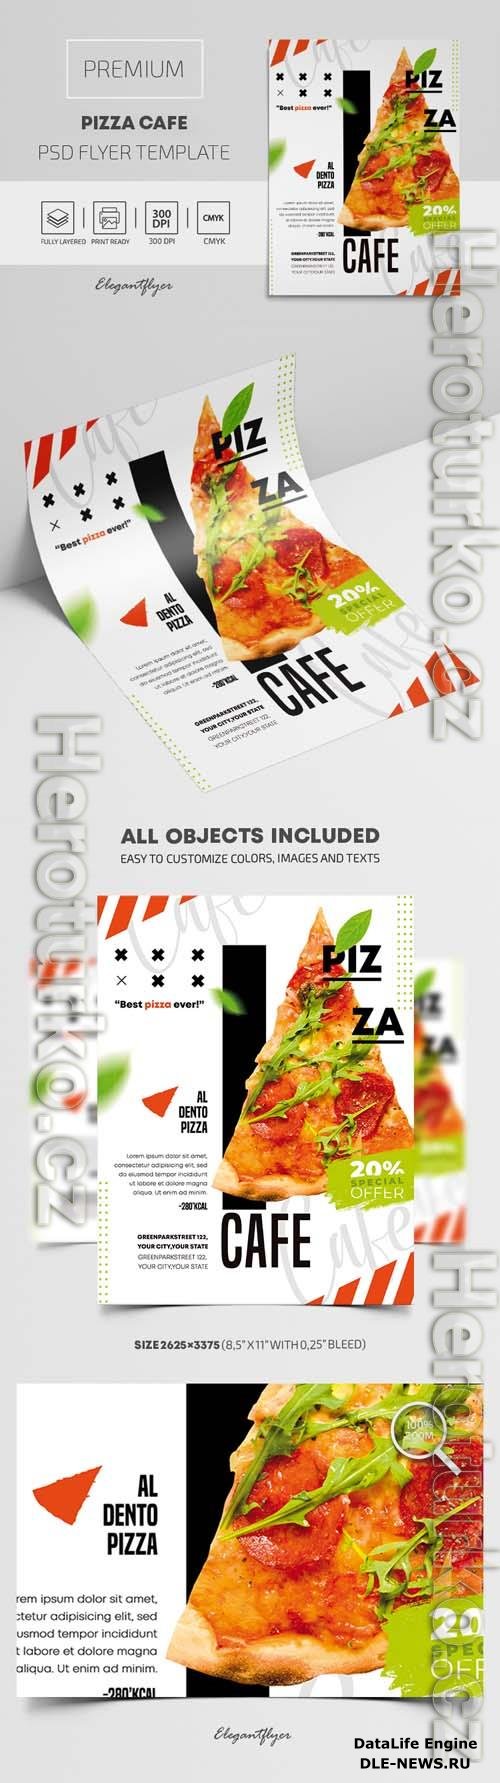 Pizza Cafe  Premium PSD Flyer Template